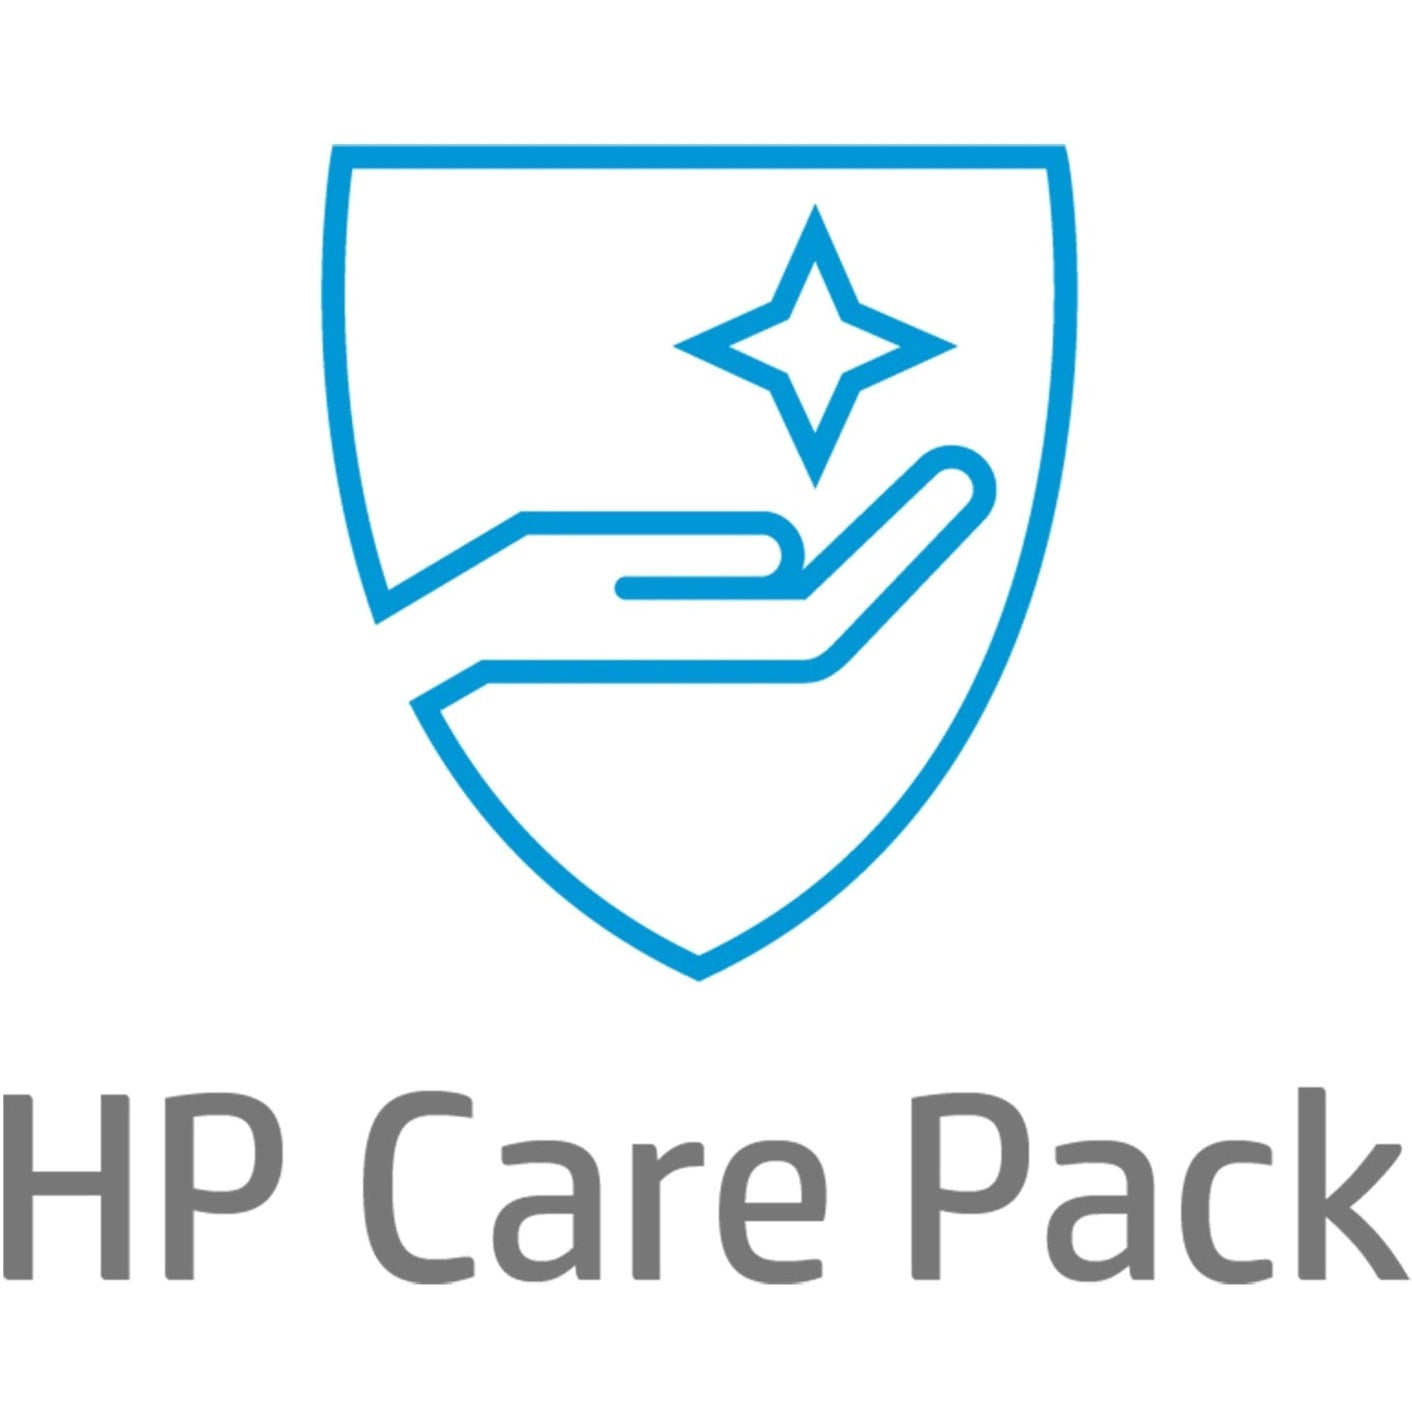 HP Care Pack - 2 Year / 2 Incident - Service (UN032E)